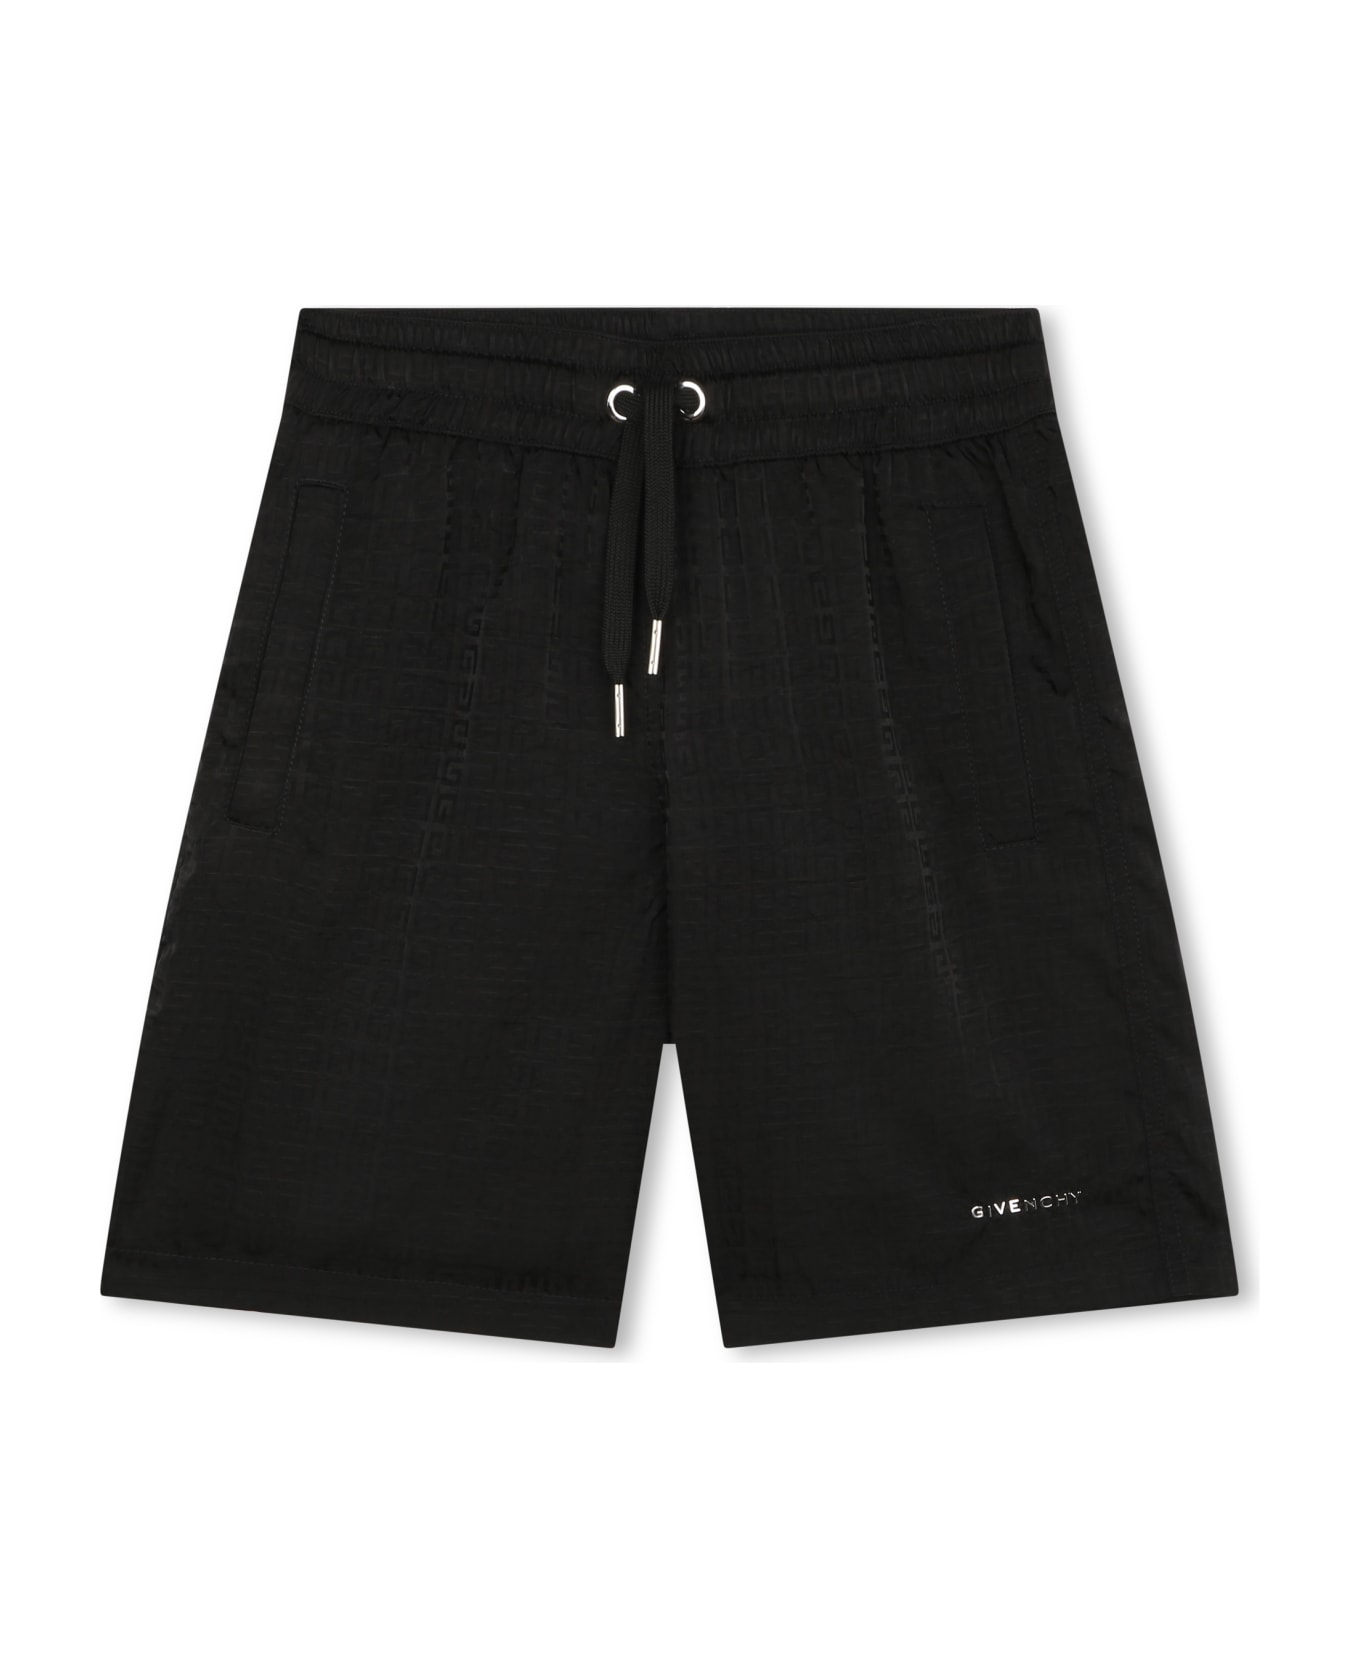 Givenchy Sports Shorts With Monogram - B Nero